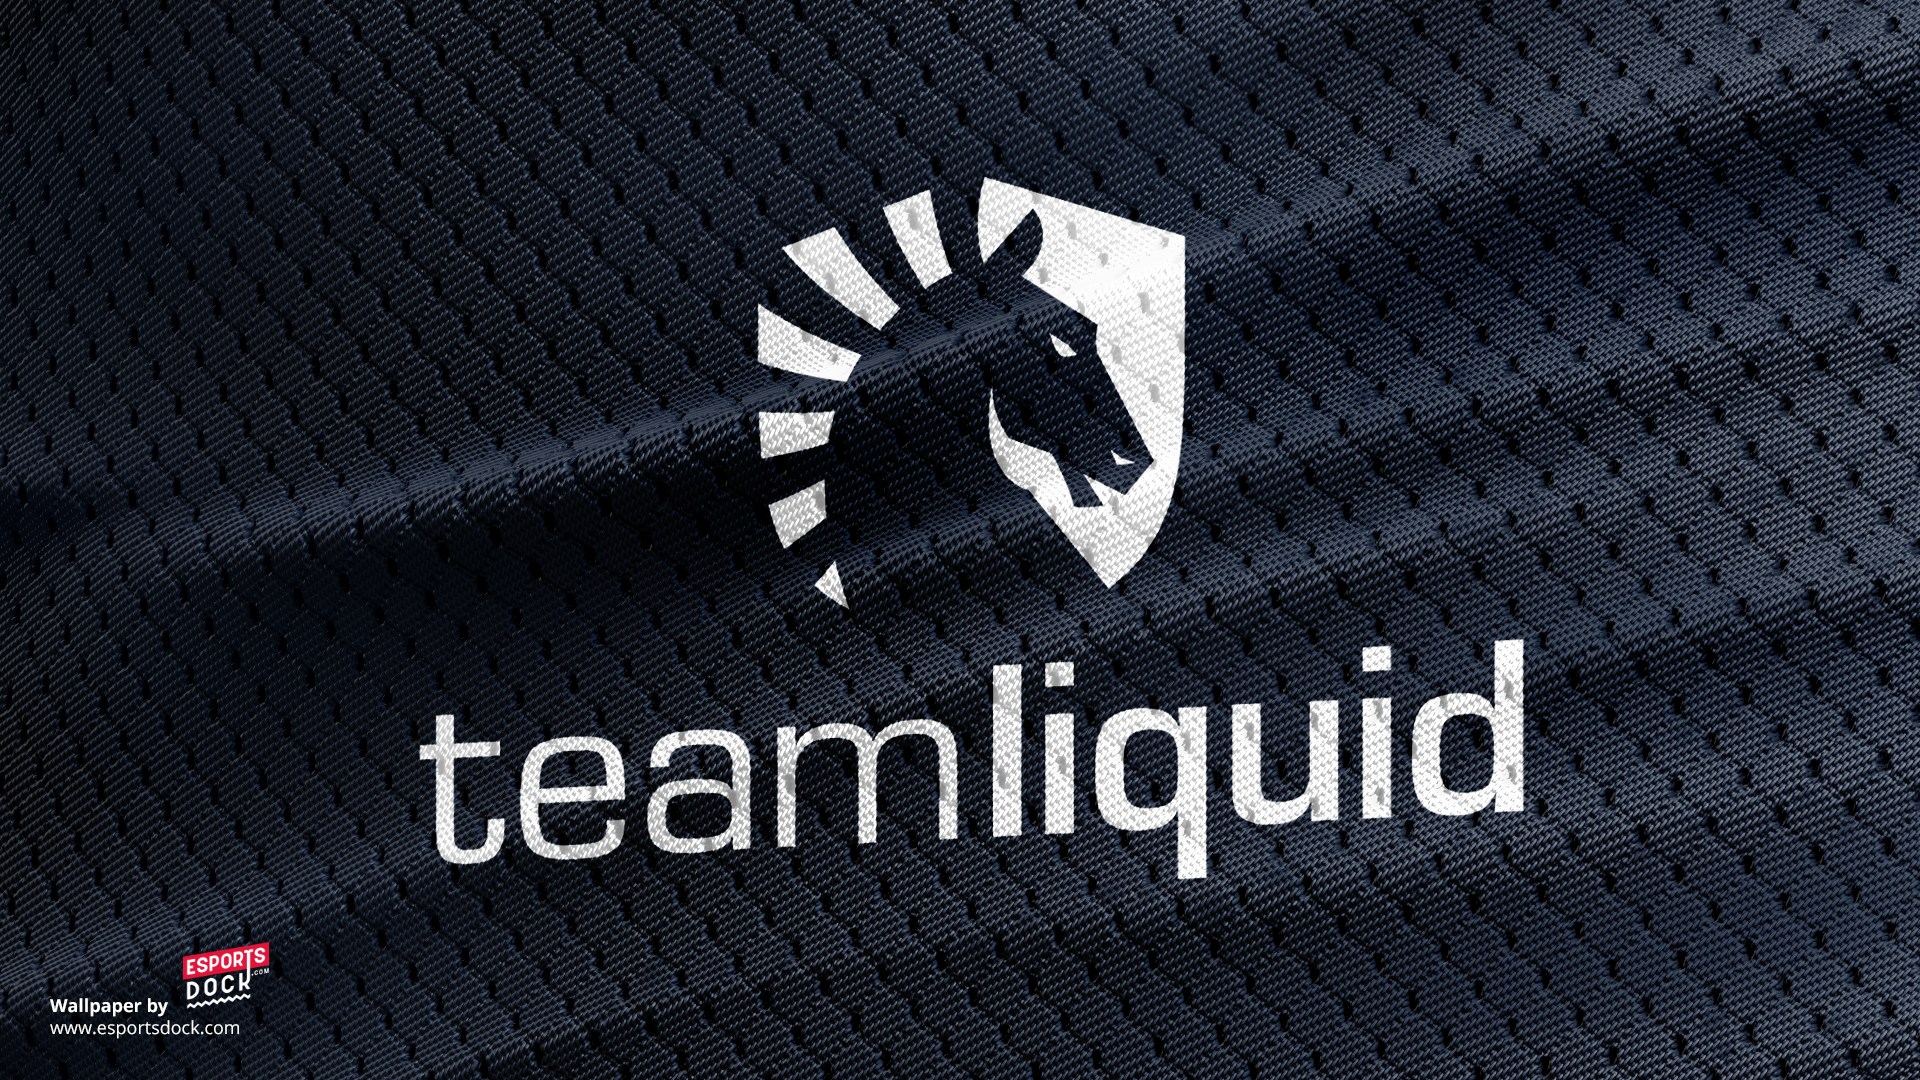 CS:GO Wallpaper / Team Liquid Wallpaper in HD for the Community :)